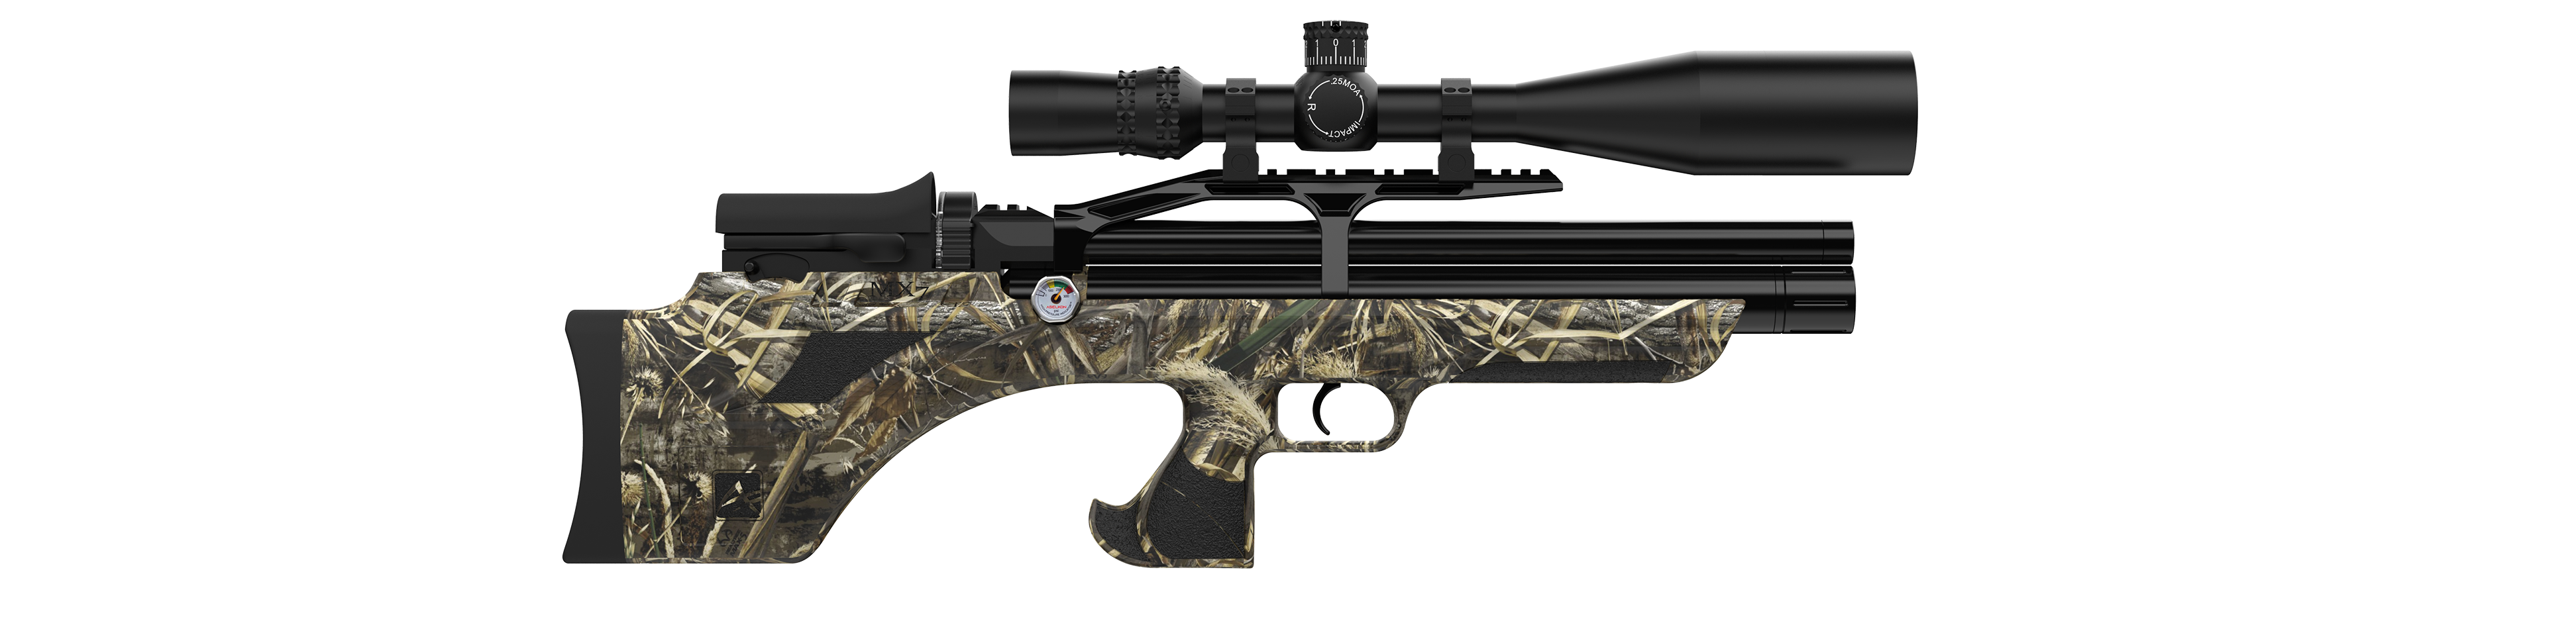 Aselkon MX7-S pcp air rifle camo model